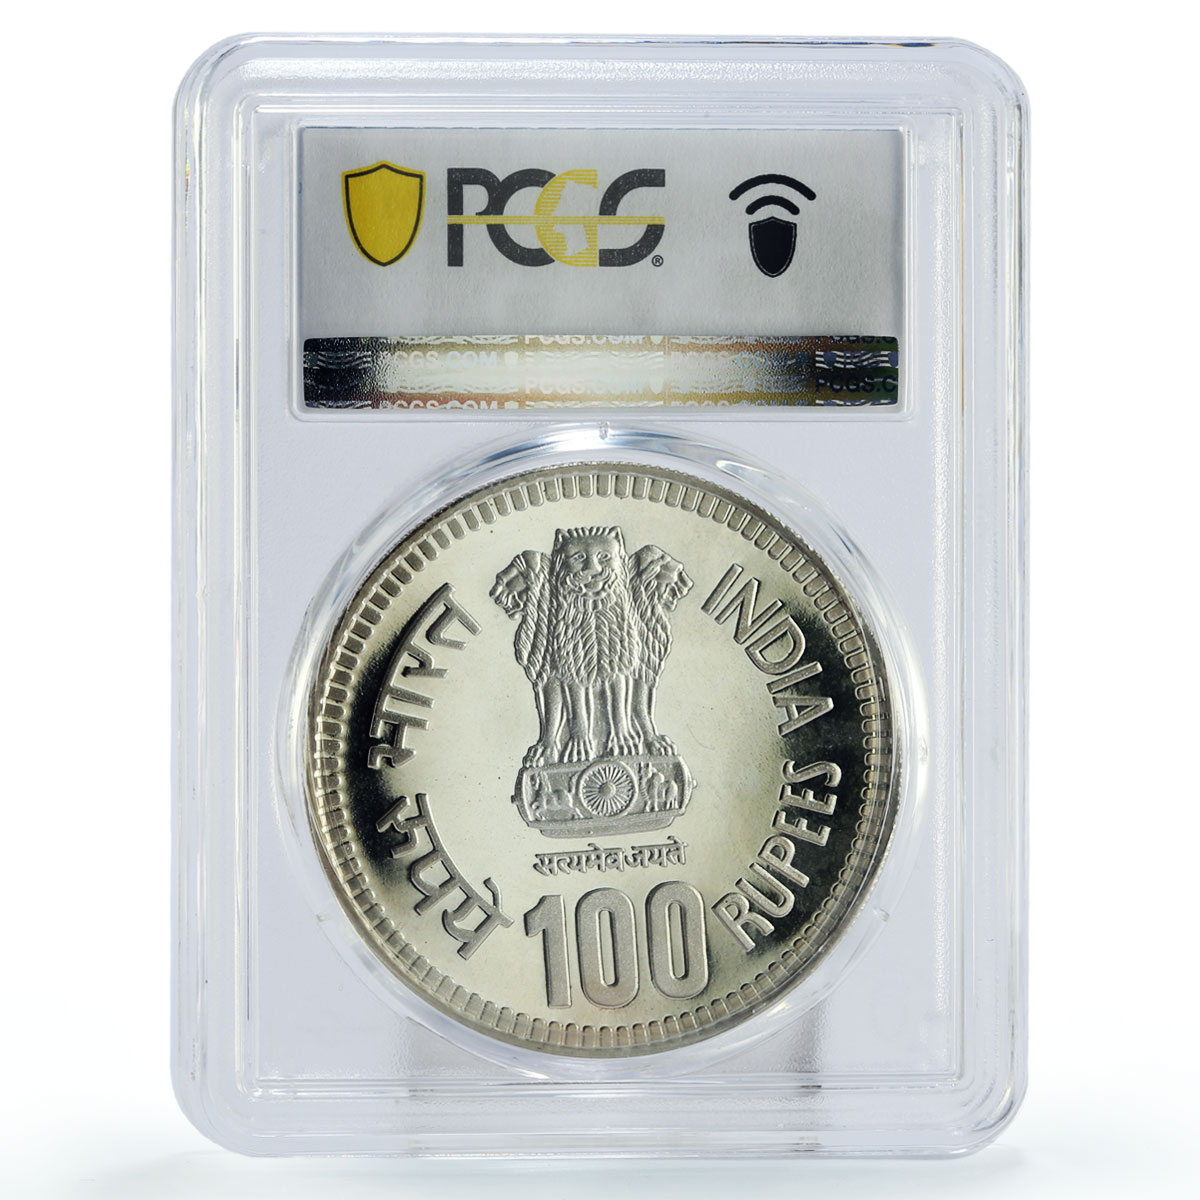 India 100 rupees Prime Minister Jawaharlal Nehru Politics PR67 PCGS Ag coin 1989